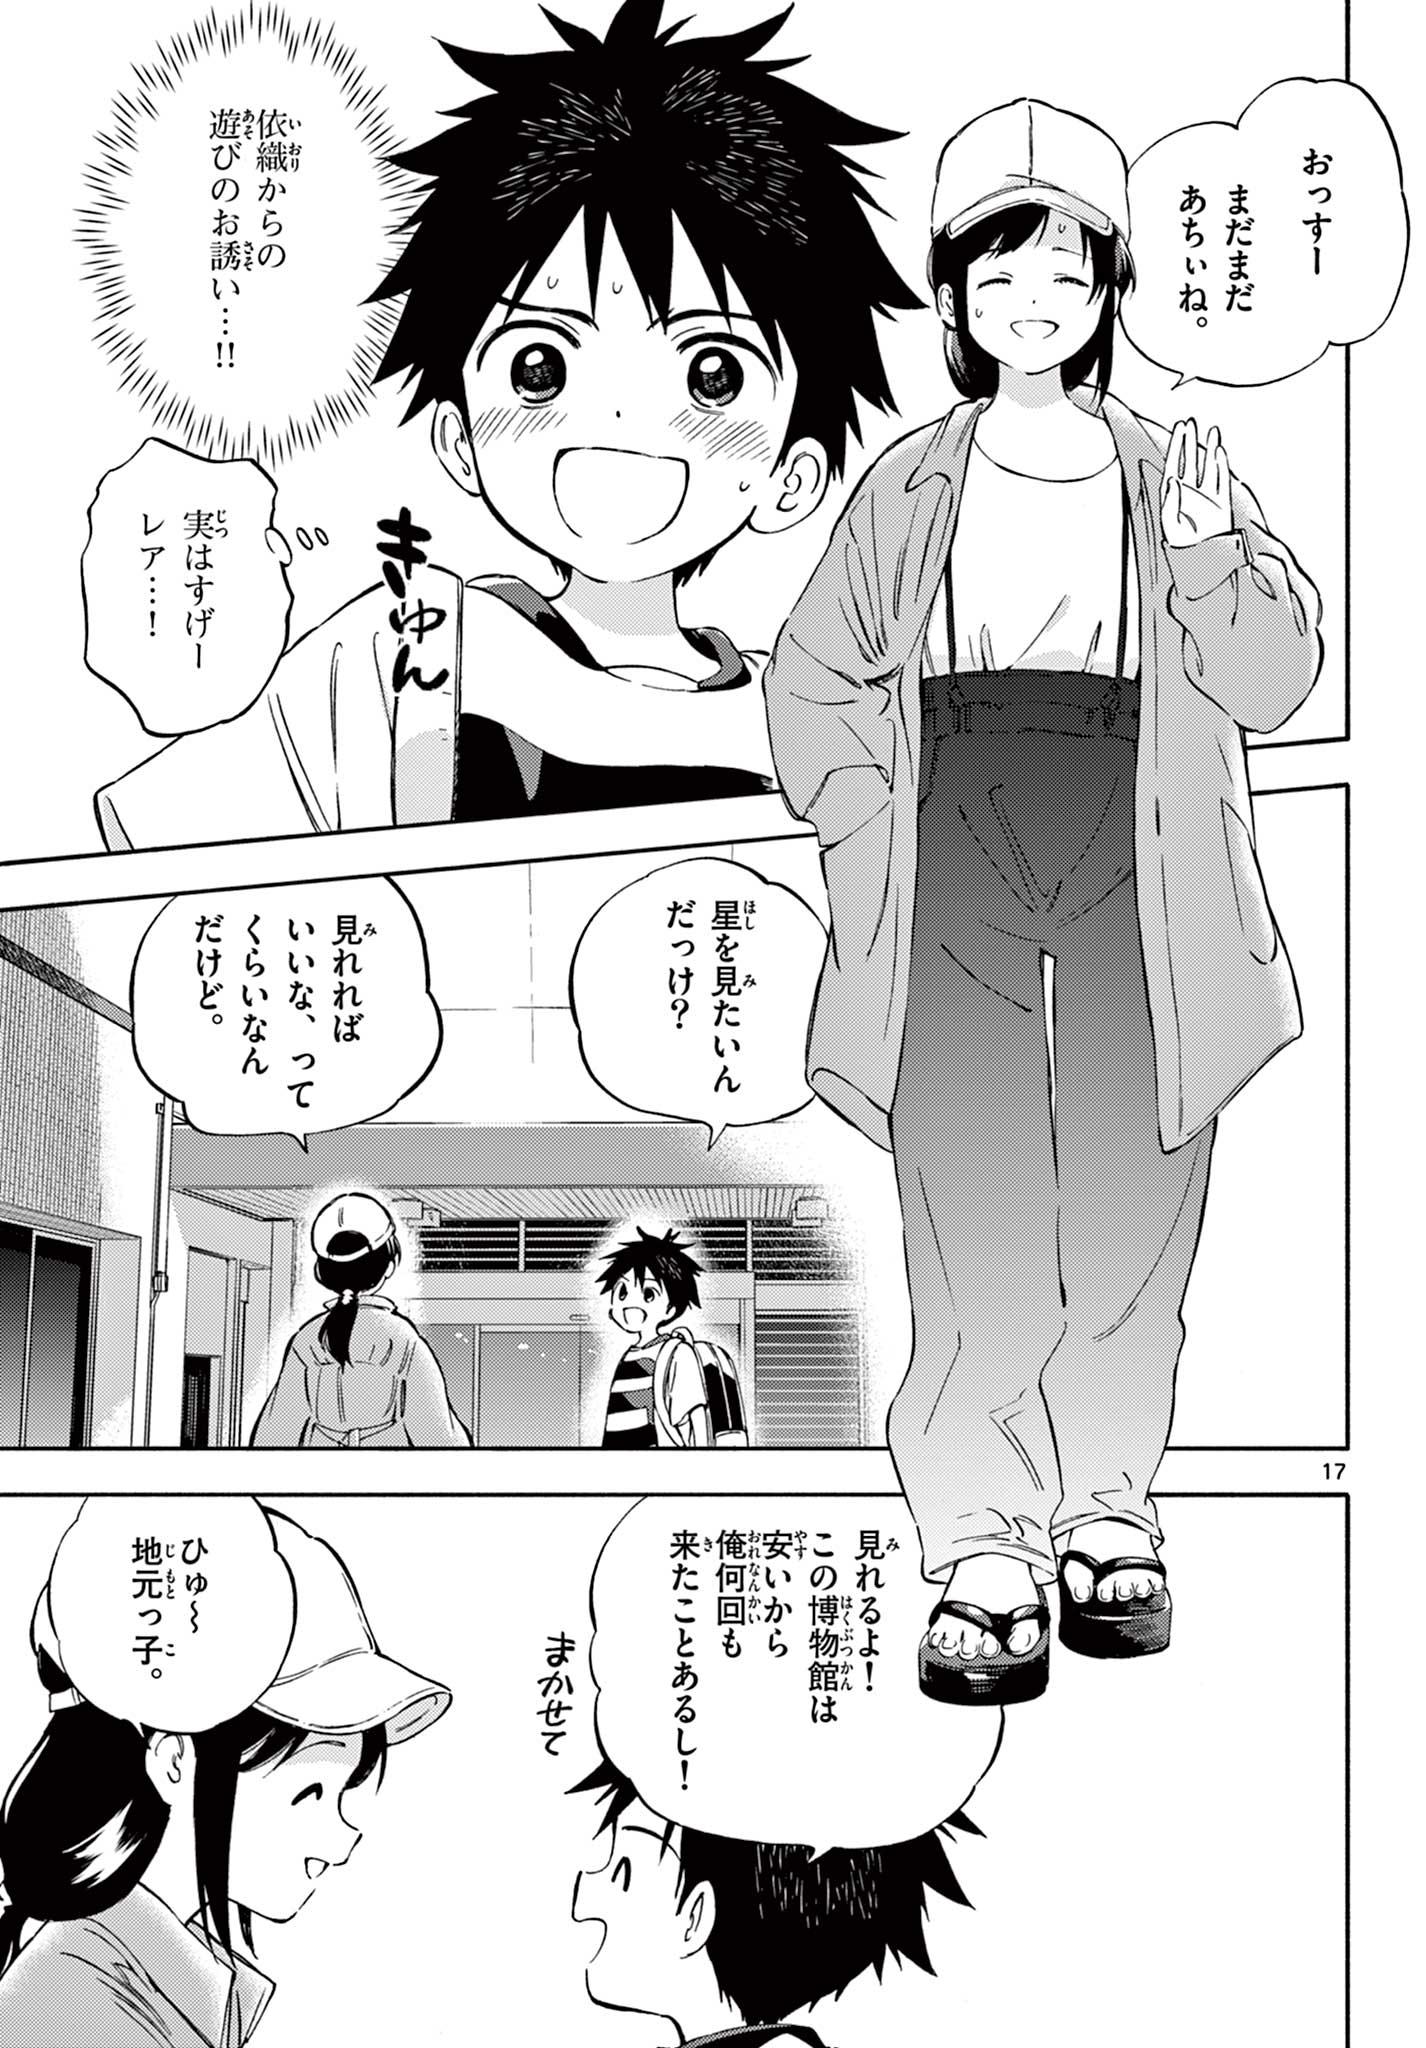 Nami no Shijima no Horizont - Chapter 15.2 - Page 2